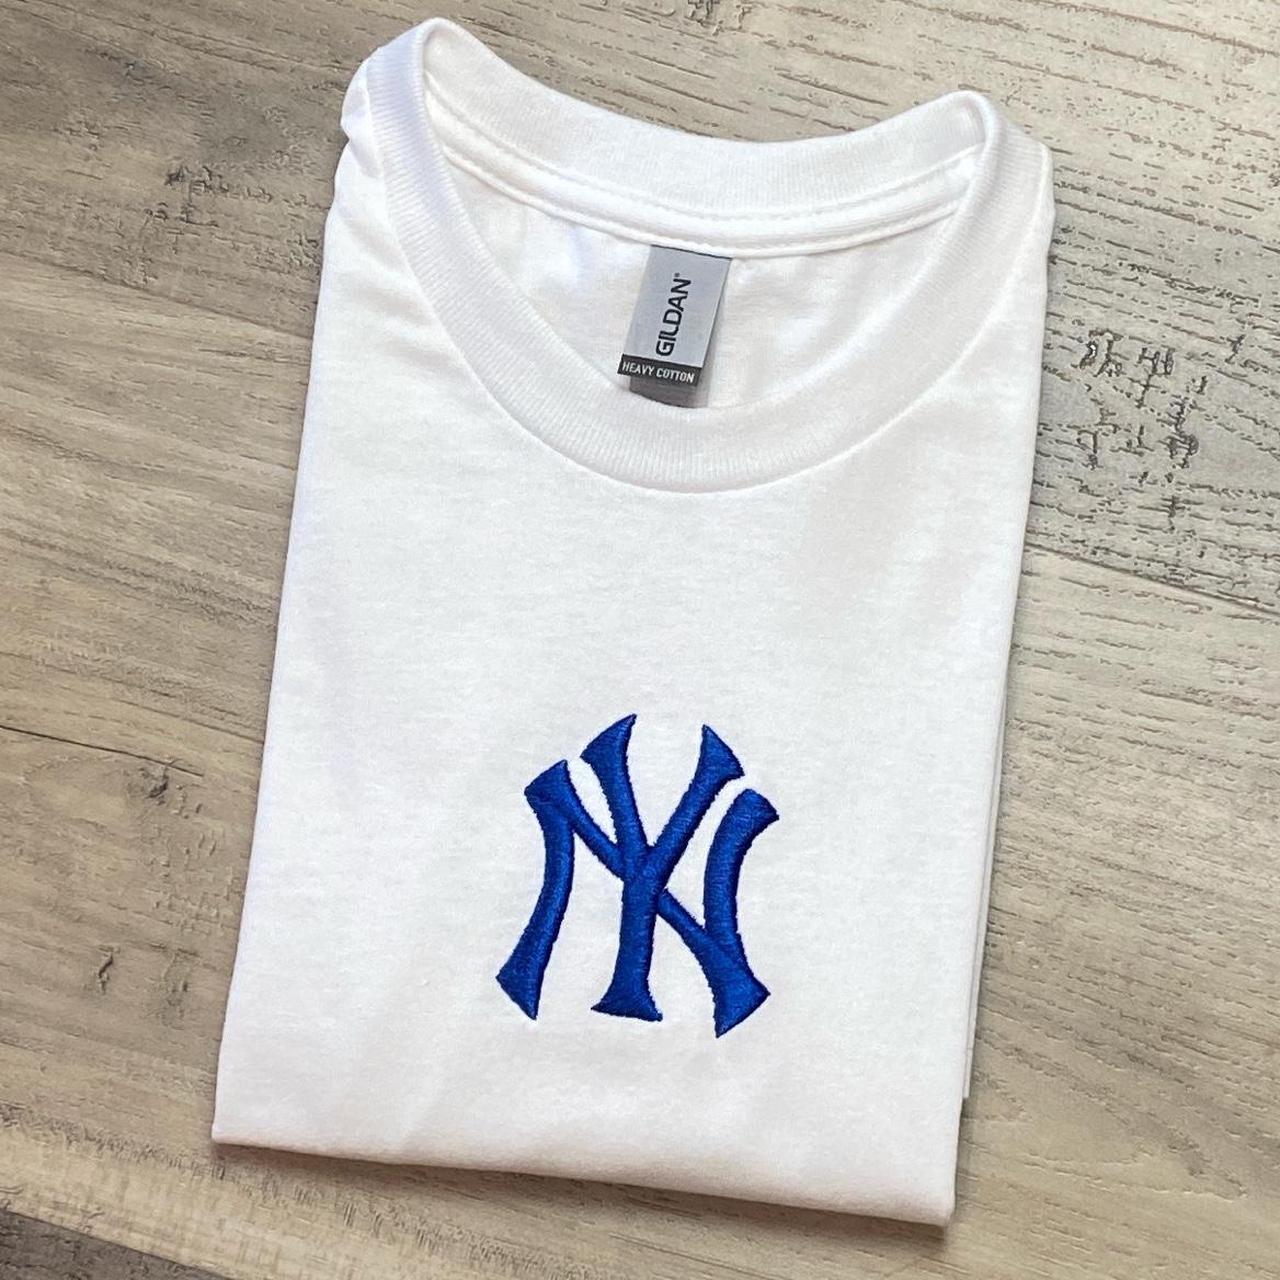 Vintage 70s Yankees baseball t shirt size - Depop